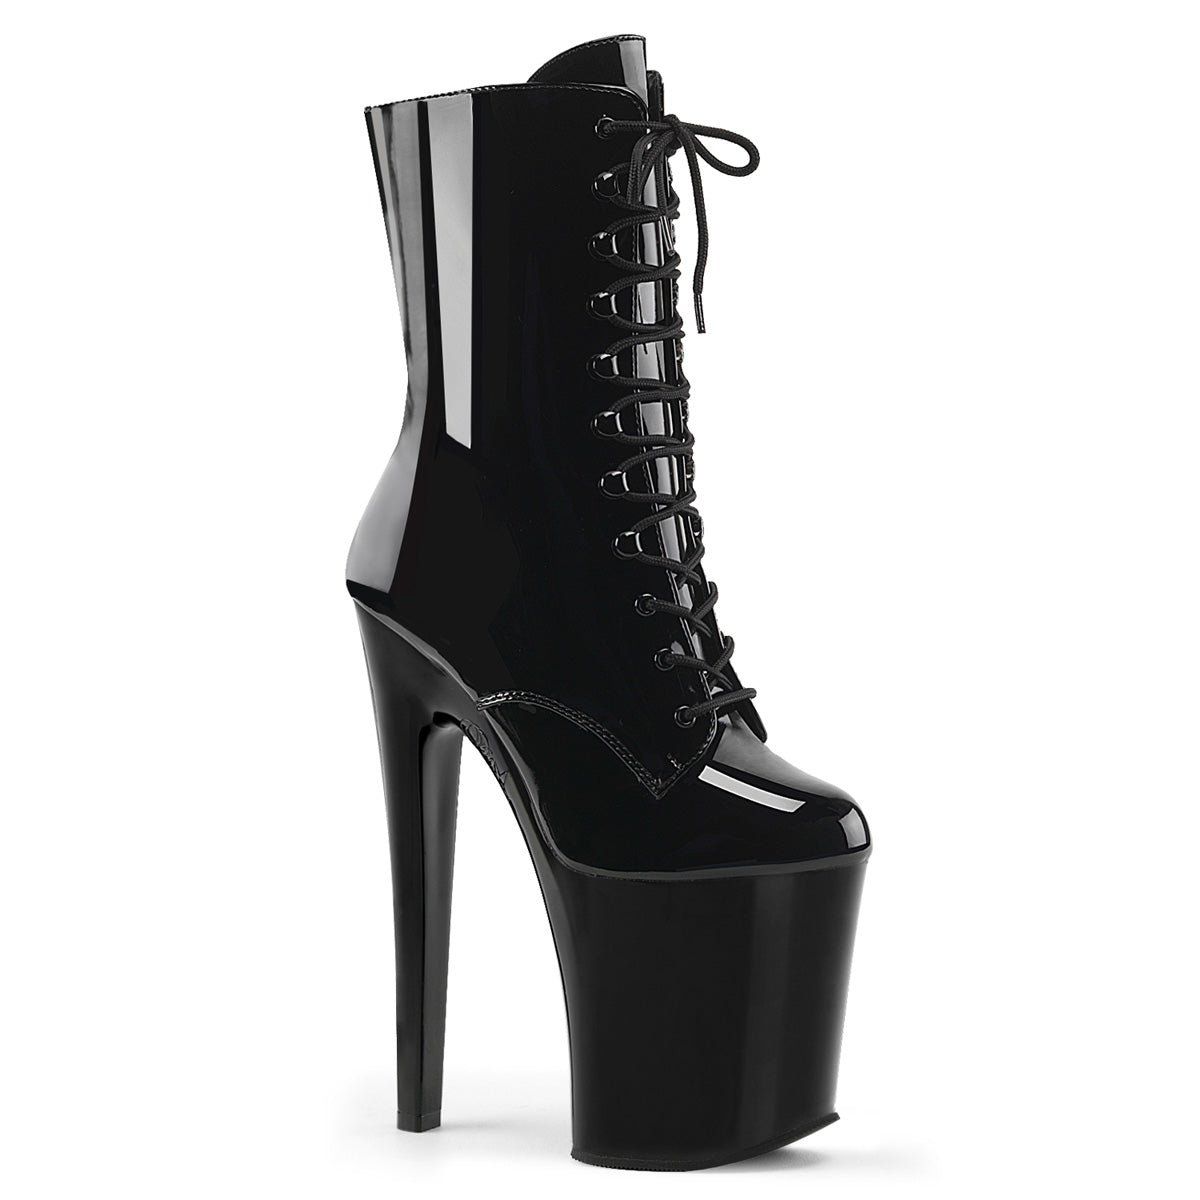 XTREME-1020 8" Heel Black Patent Pole Dancer Platform Black Patent Boots